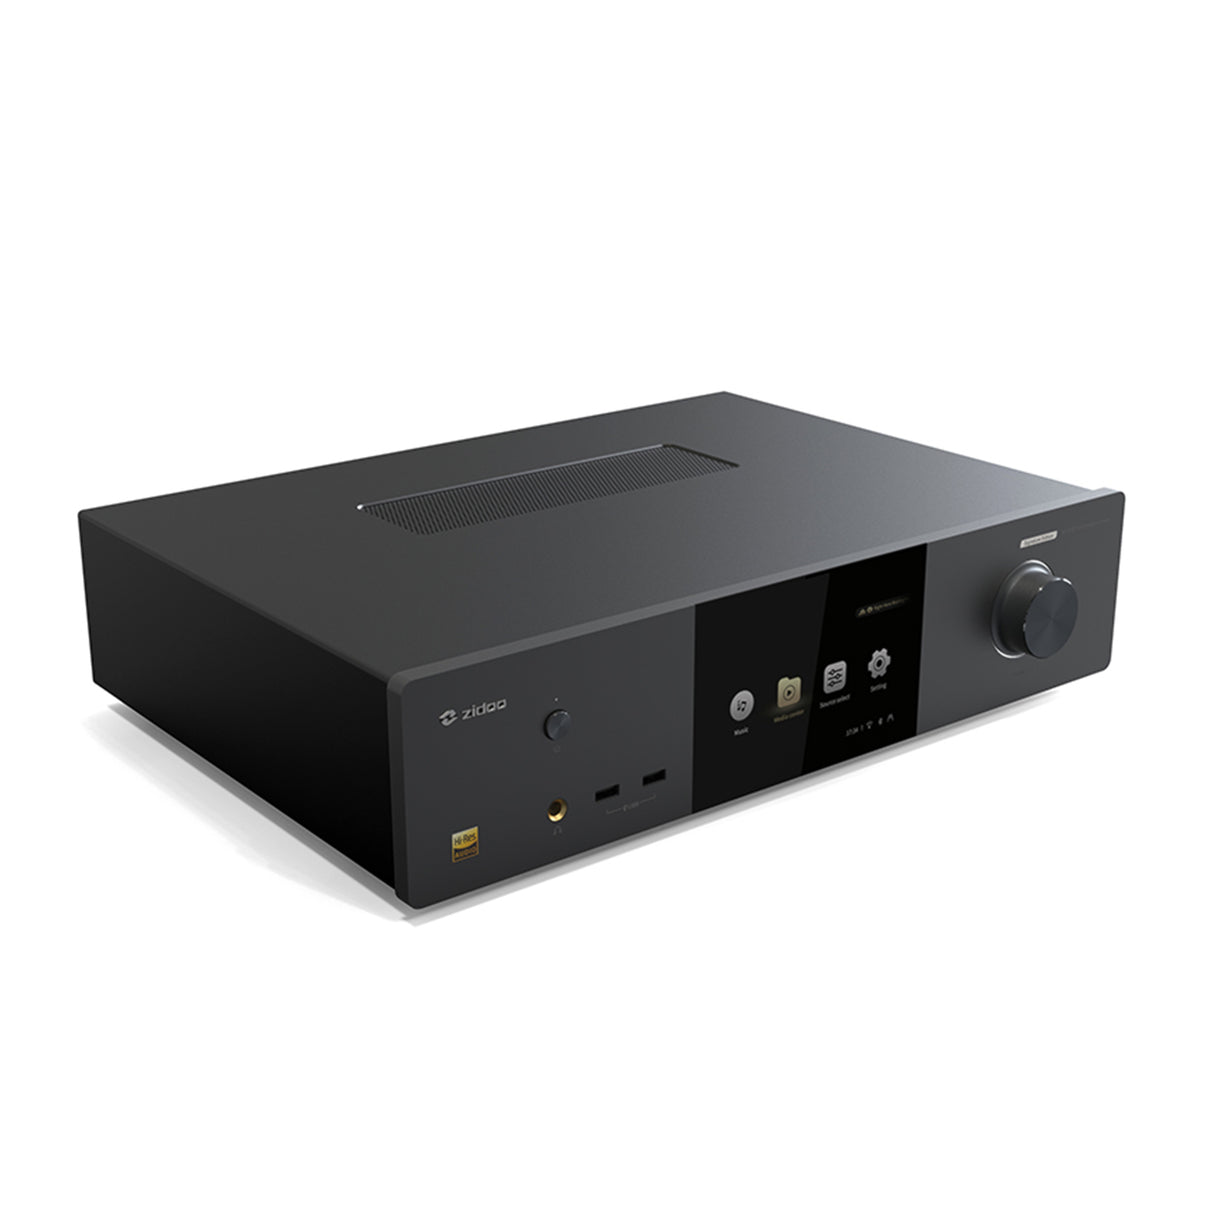 Zidoo Neo Alpha 4K Hi-Fi Media player / Network Streamer With Screen Display